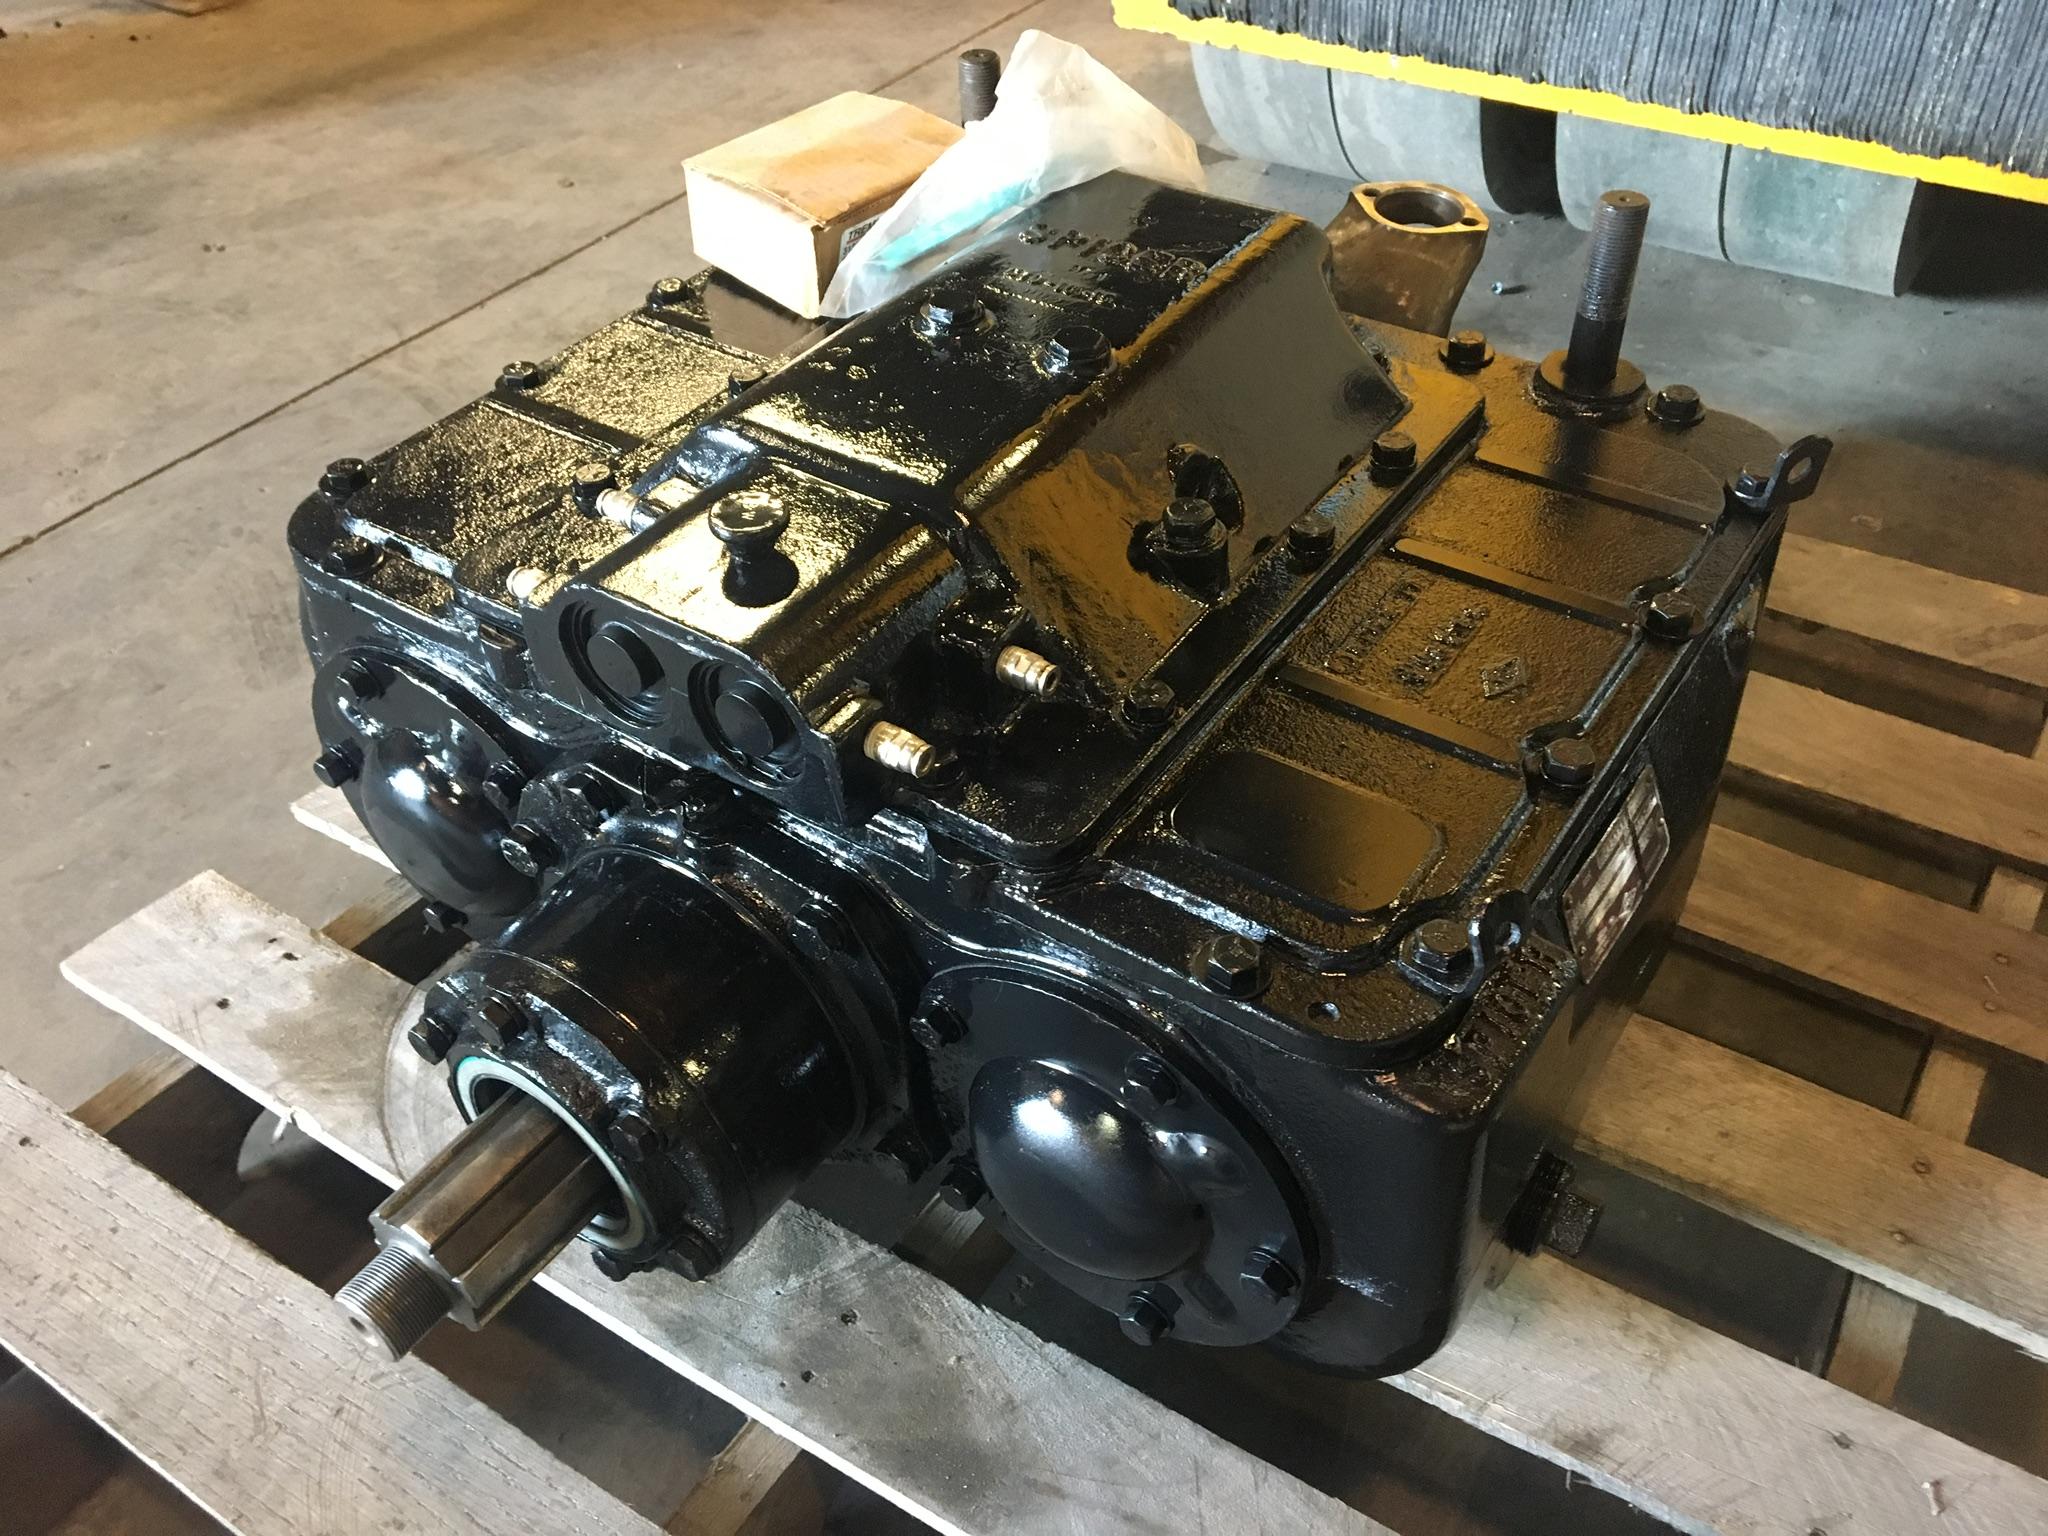 Spicer P1241c auxiliary transmission - Parts for Sale - BigMackTrucks.com